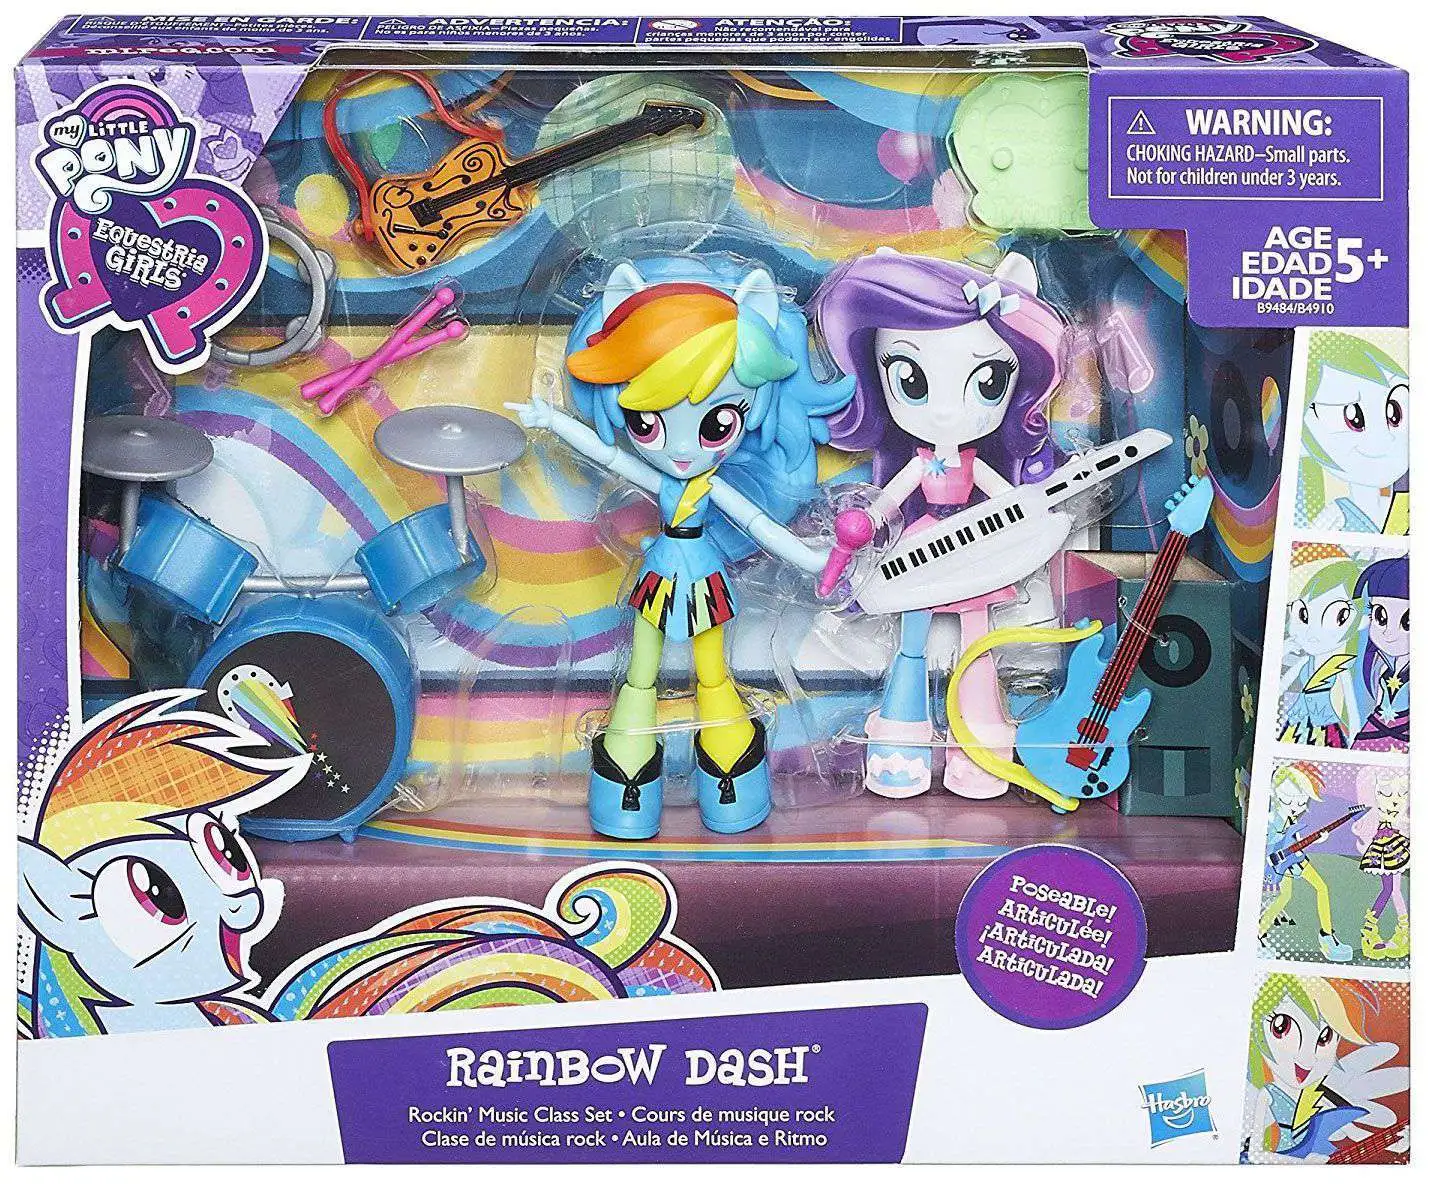 My Little Pony Equestria Girls Rainbow Dash Doll and Pony Set by My Little Pony 